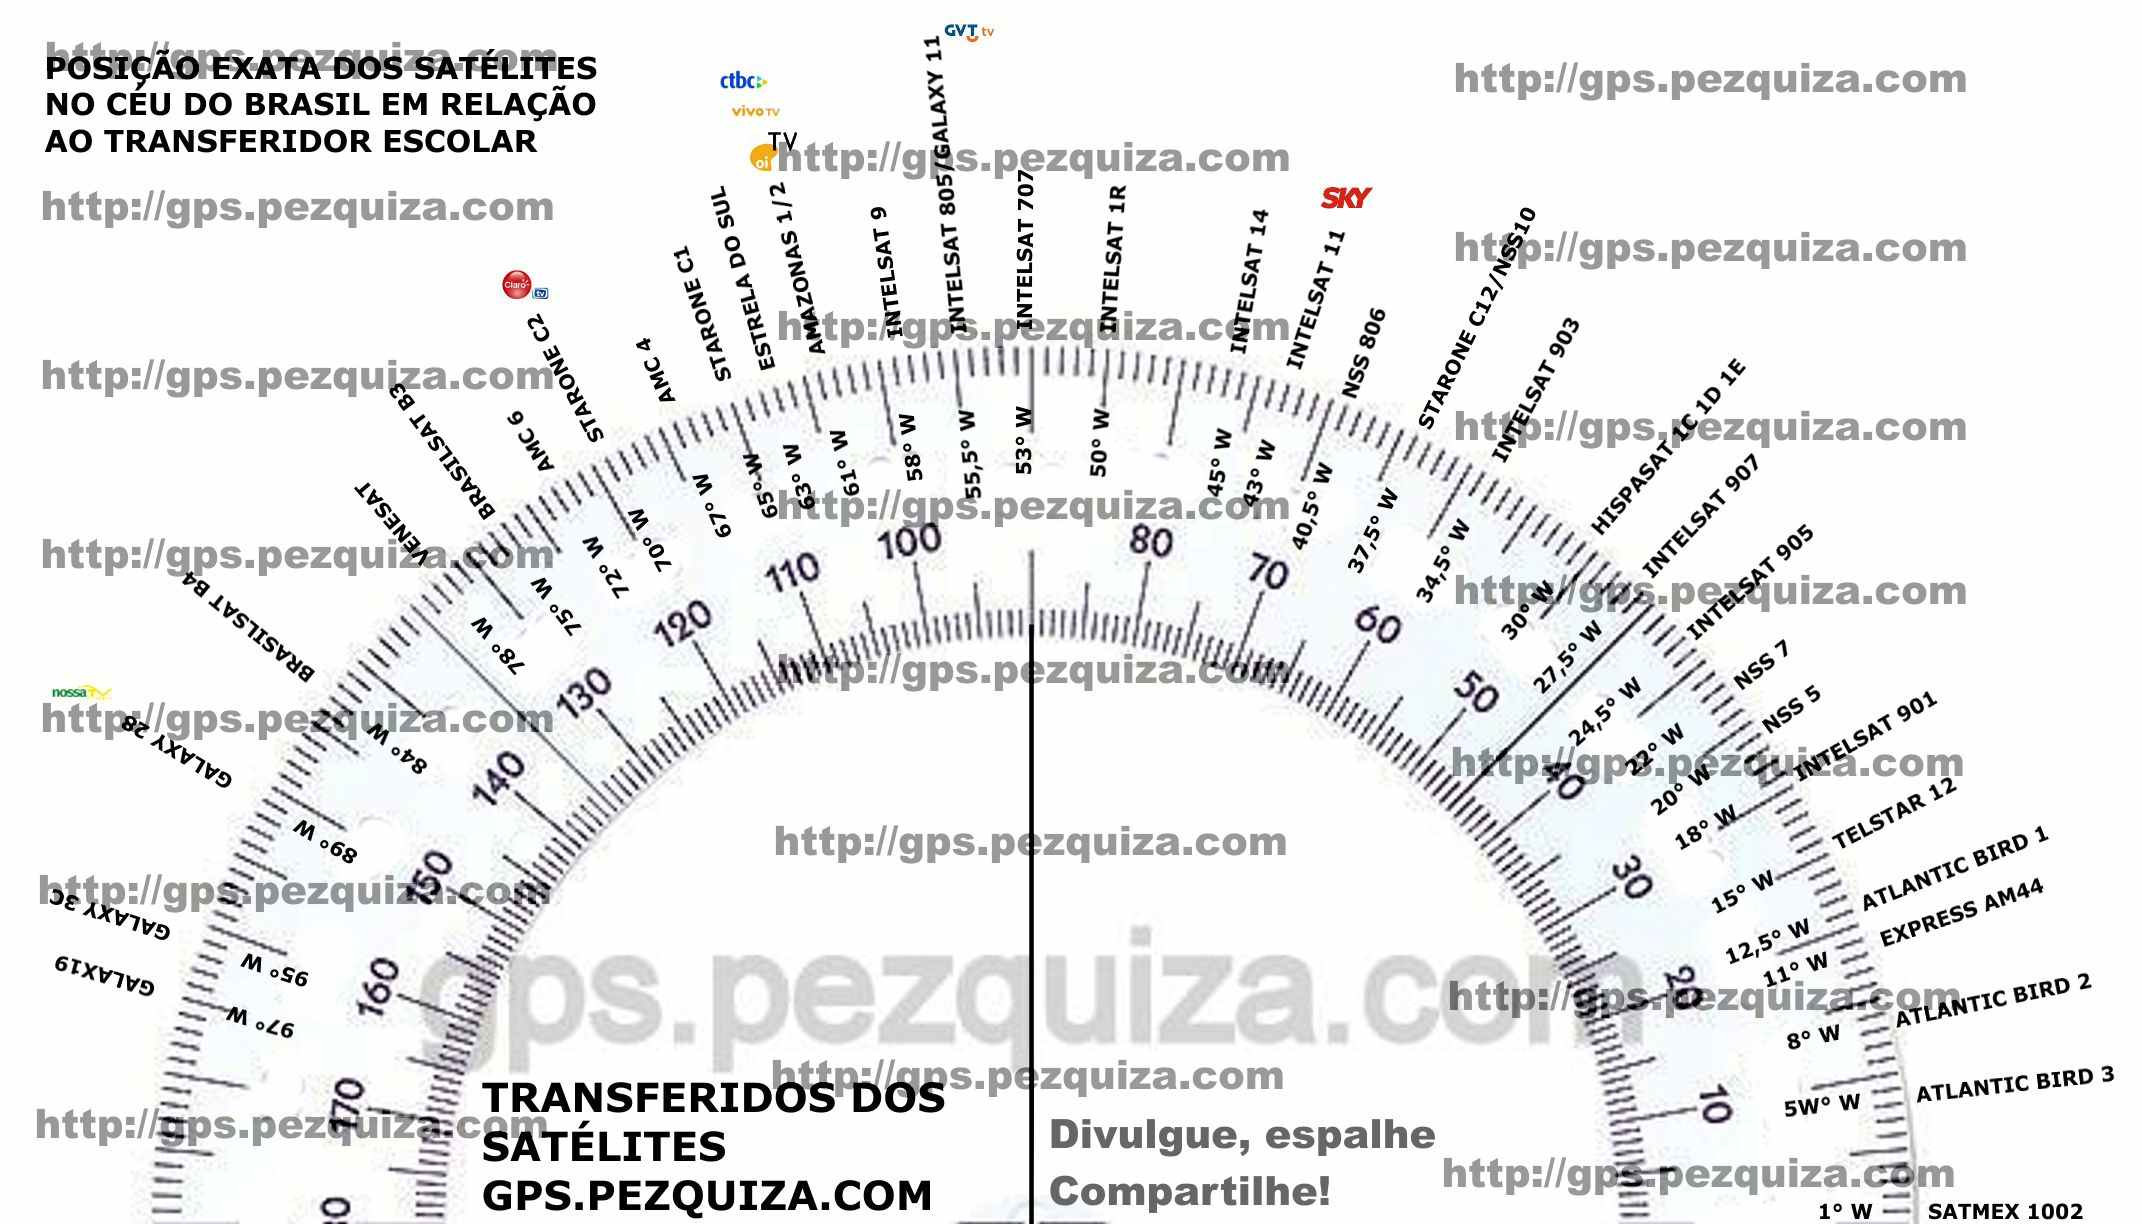 http://gps.pezquiza.com/wp-content/uploads/2012/04/Tranferidor-Pezquiza-dos-Satelites.jpg